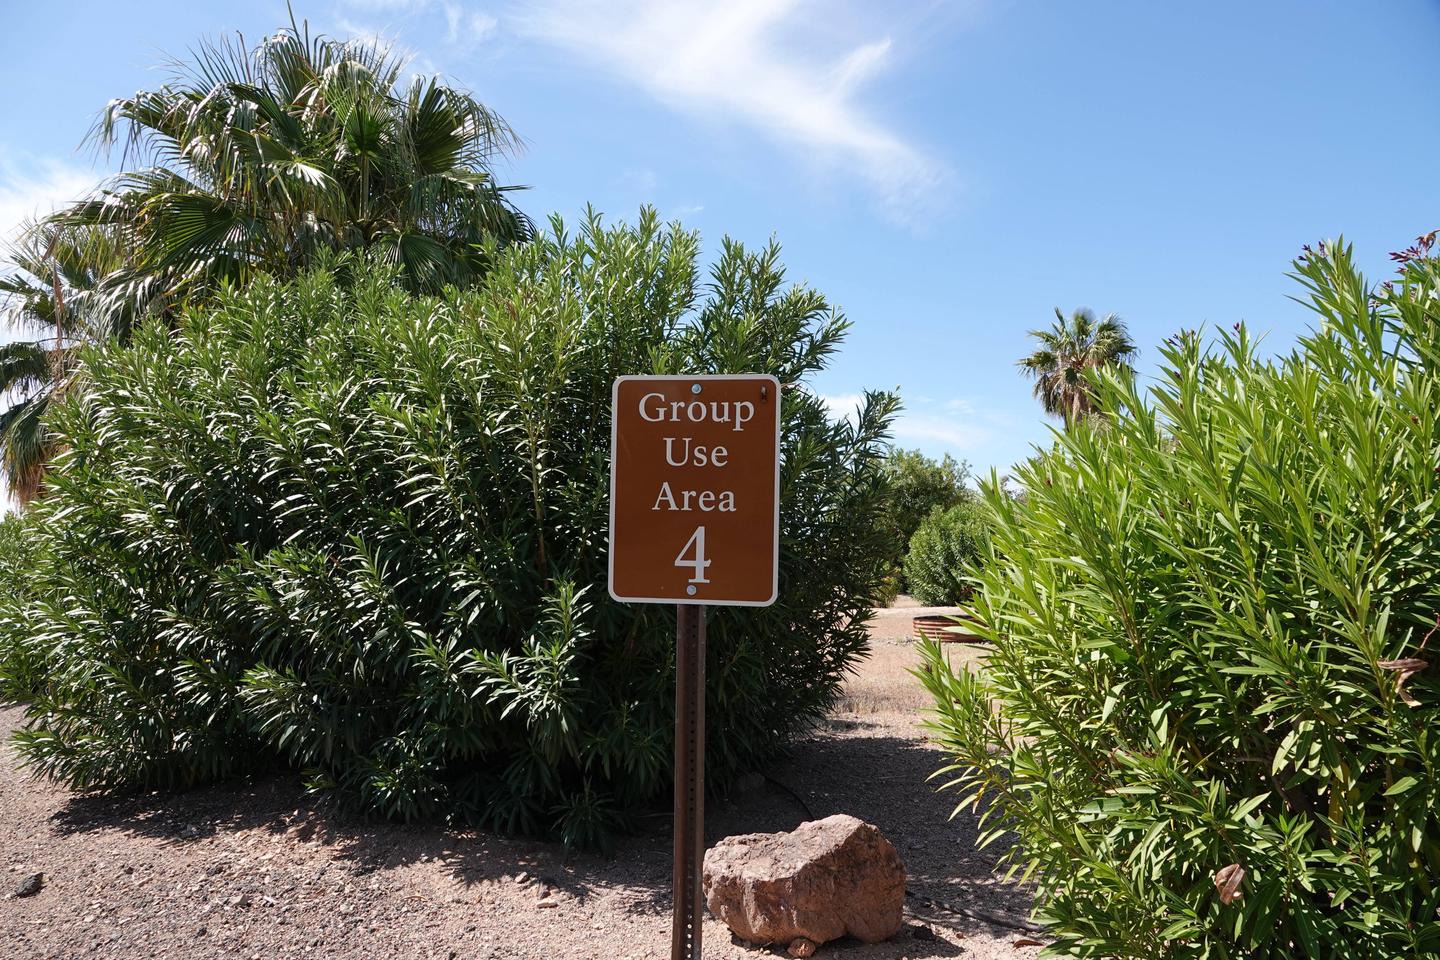 Campsite sign 4 located in a desert settingBoulder Beach Group Site 4